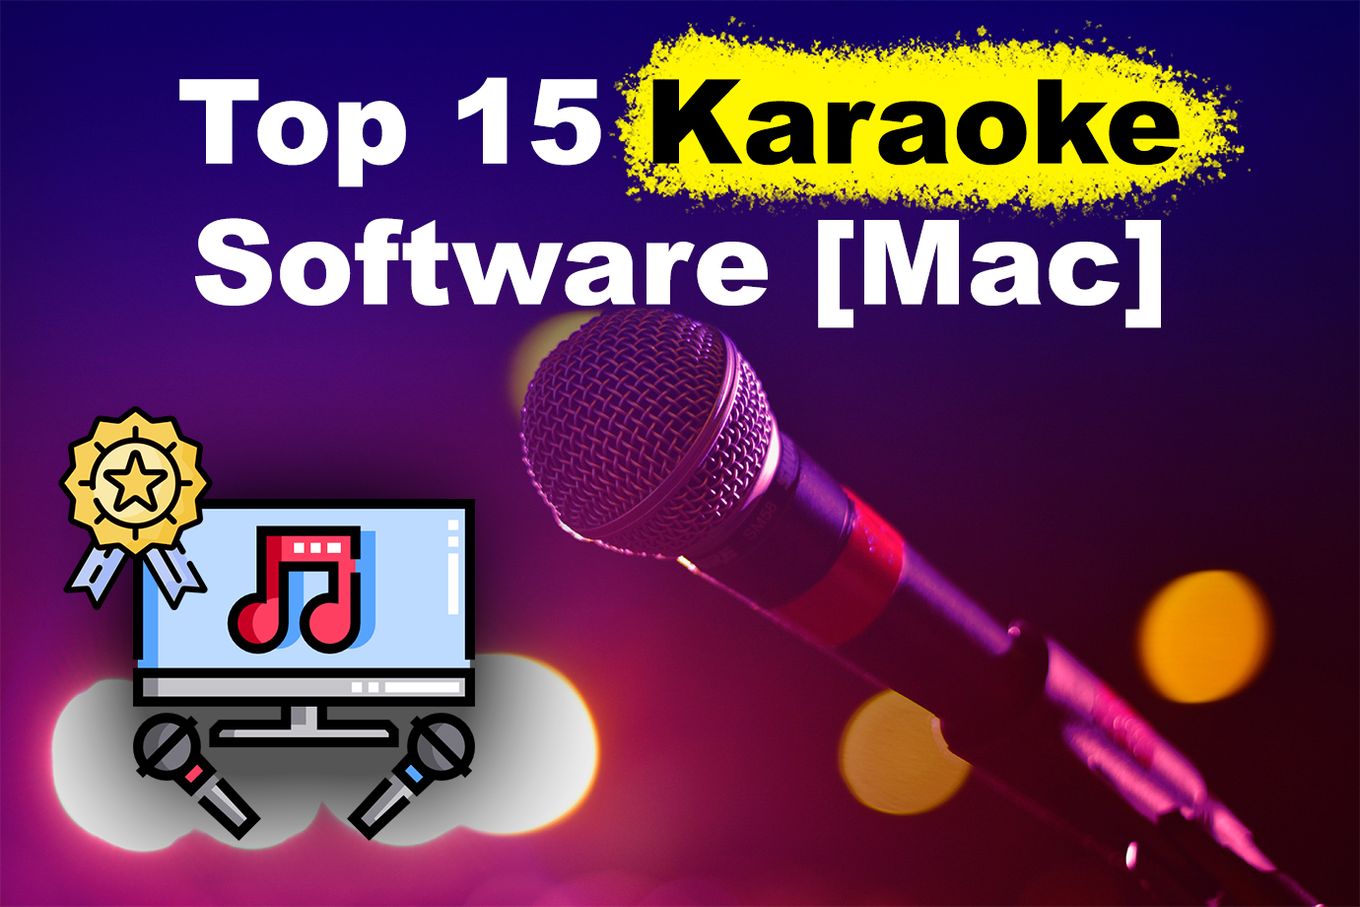 karaoke with mac